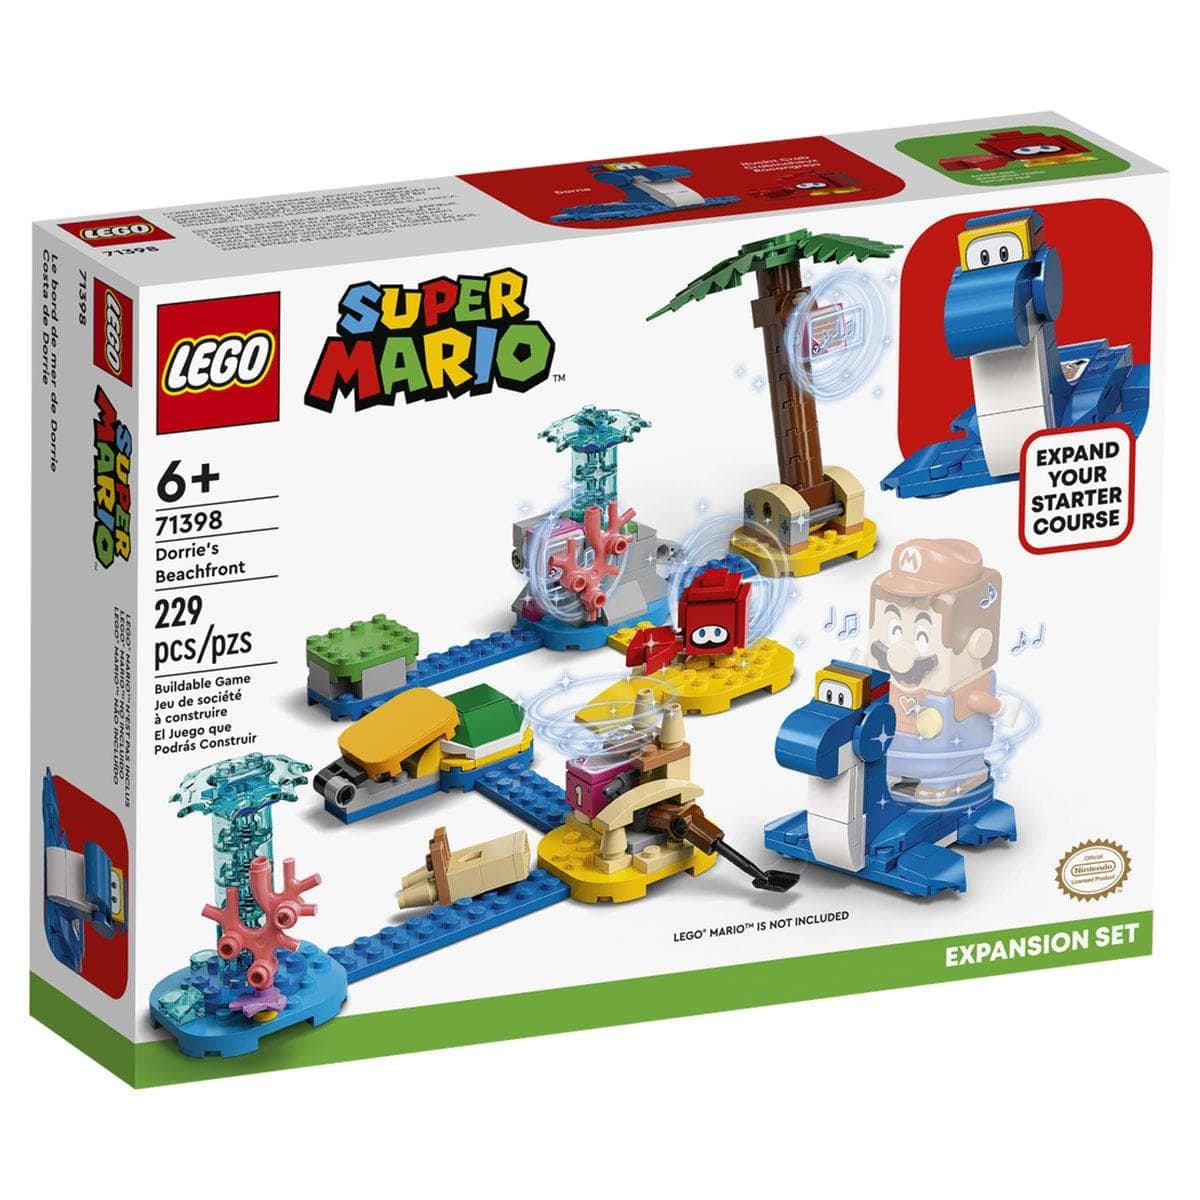 LEGO JOUET K.I.D. INC Toys & Games Sea Side Of Dorrie Expansion Set, Lego Super Mario, Ages 6+